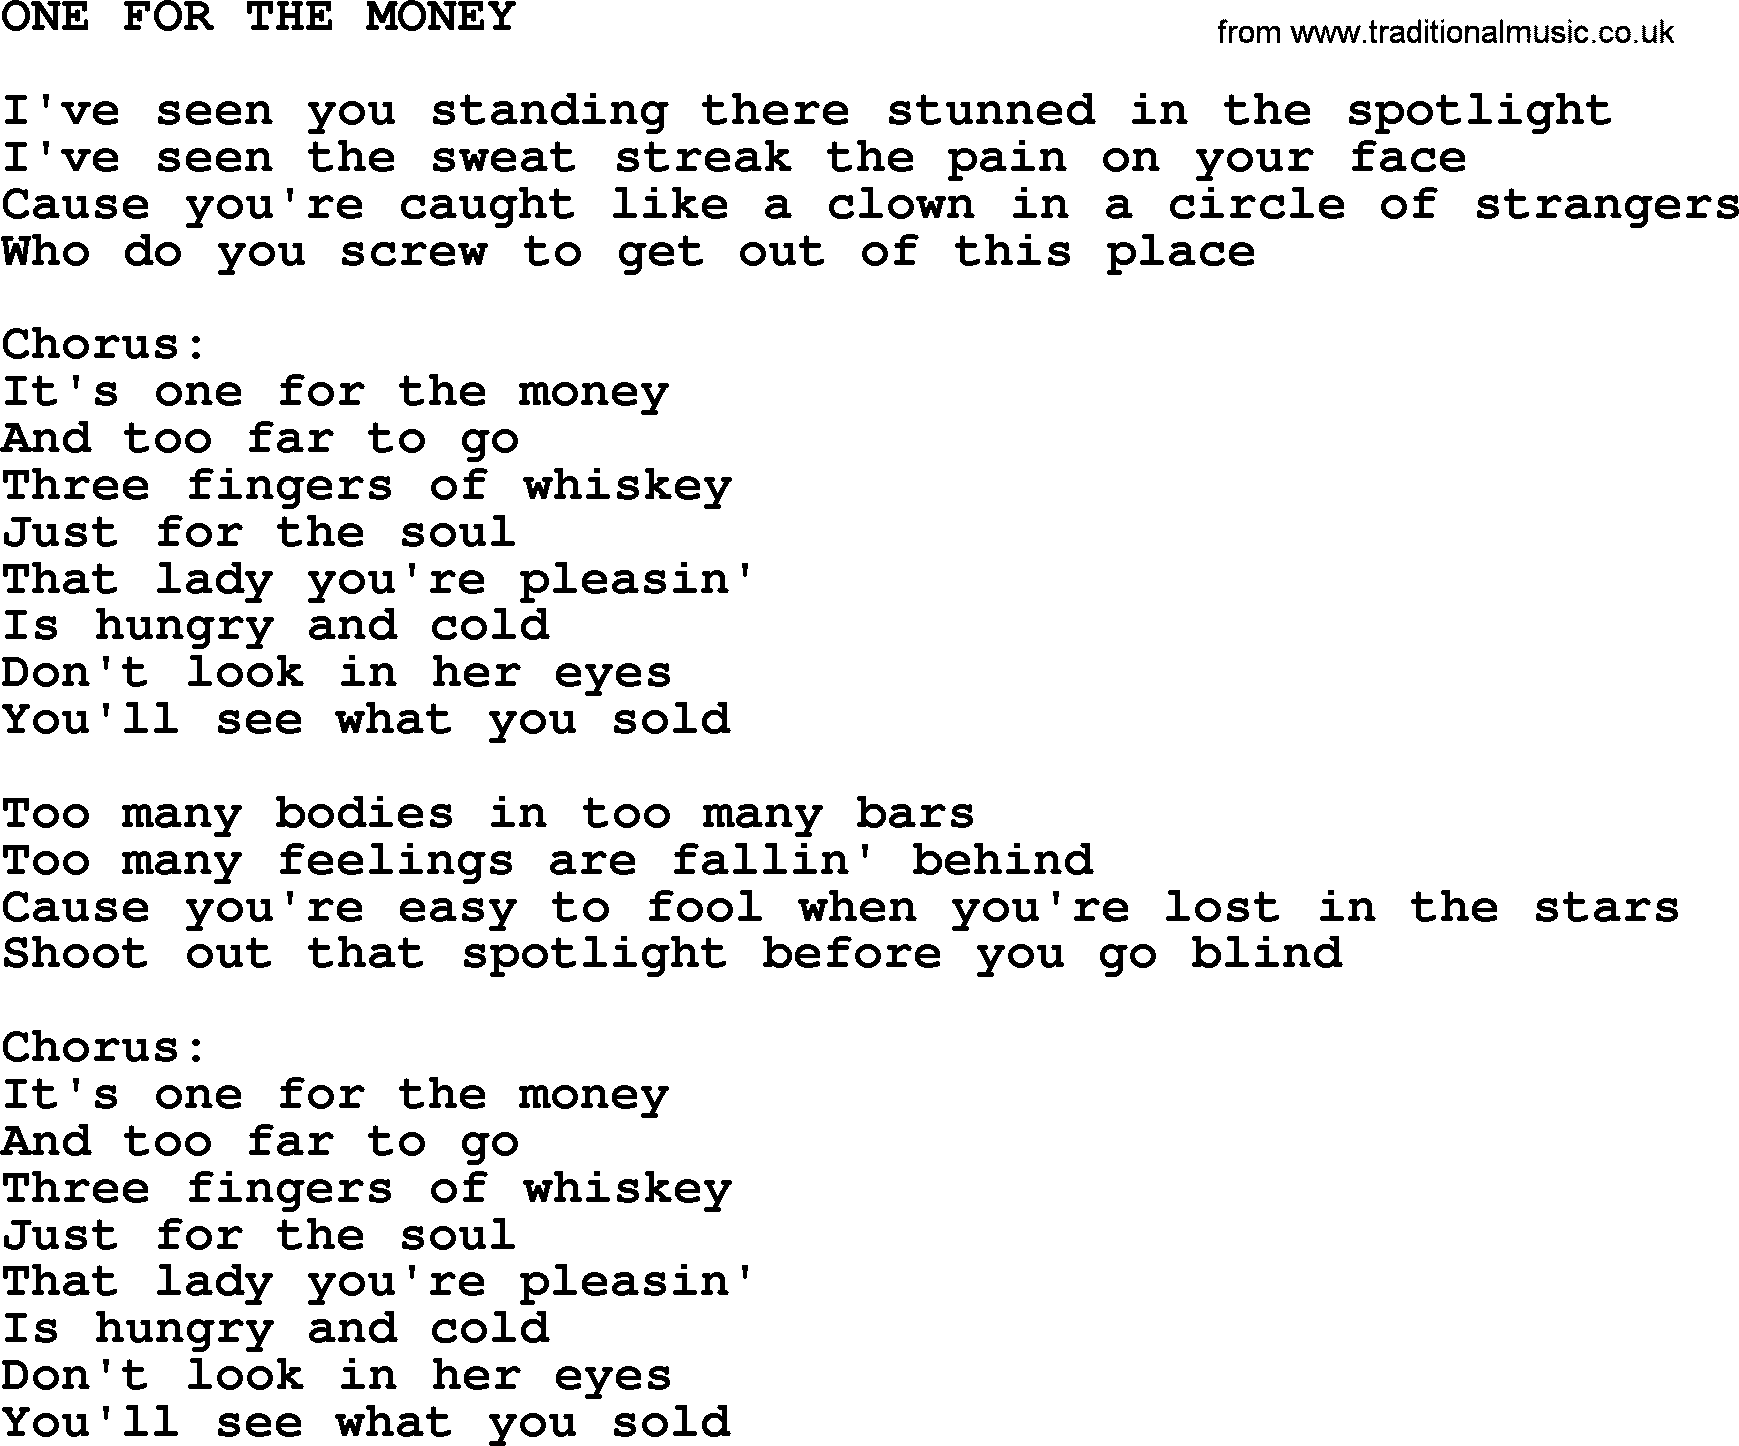 Kris Kristofferson song: One For The Money lyrics